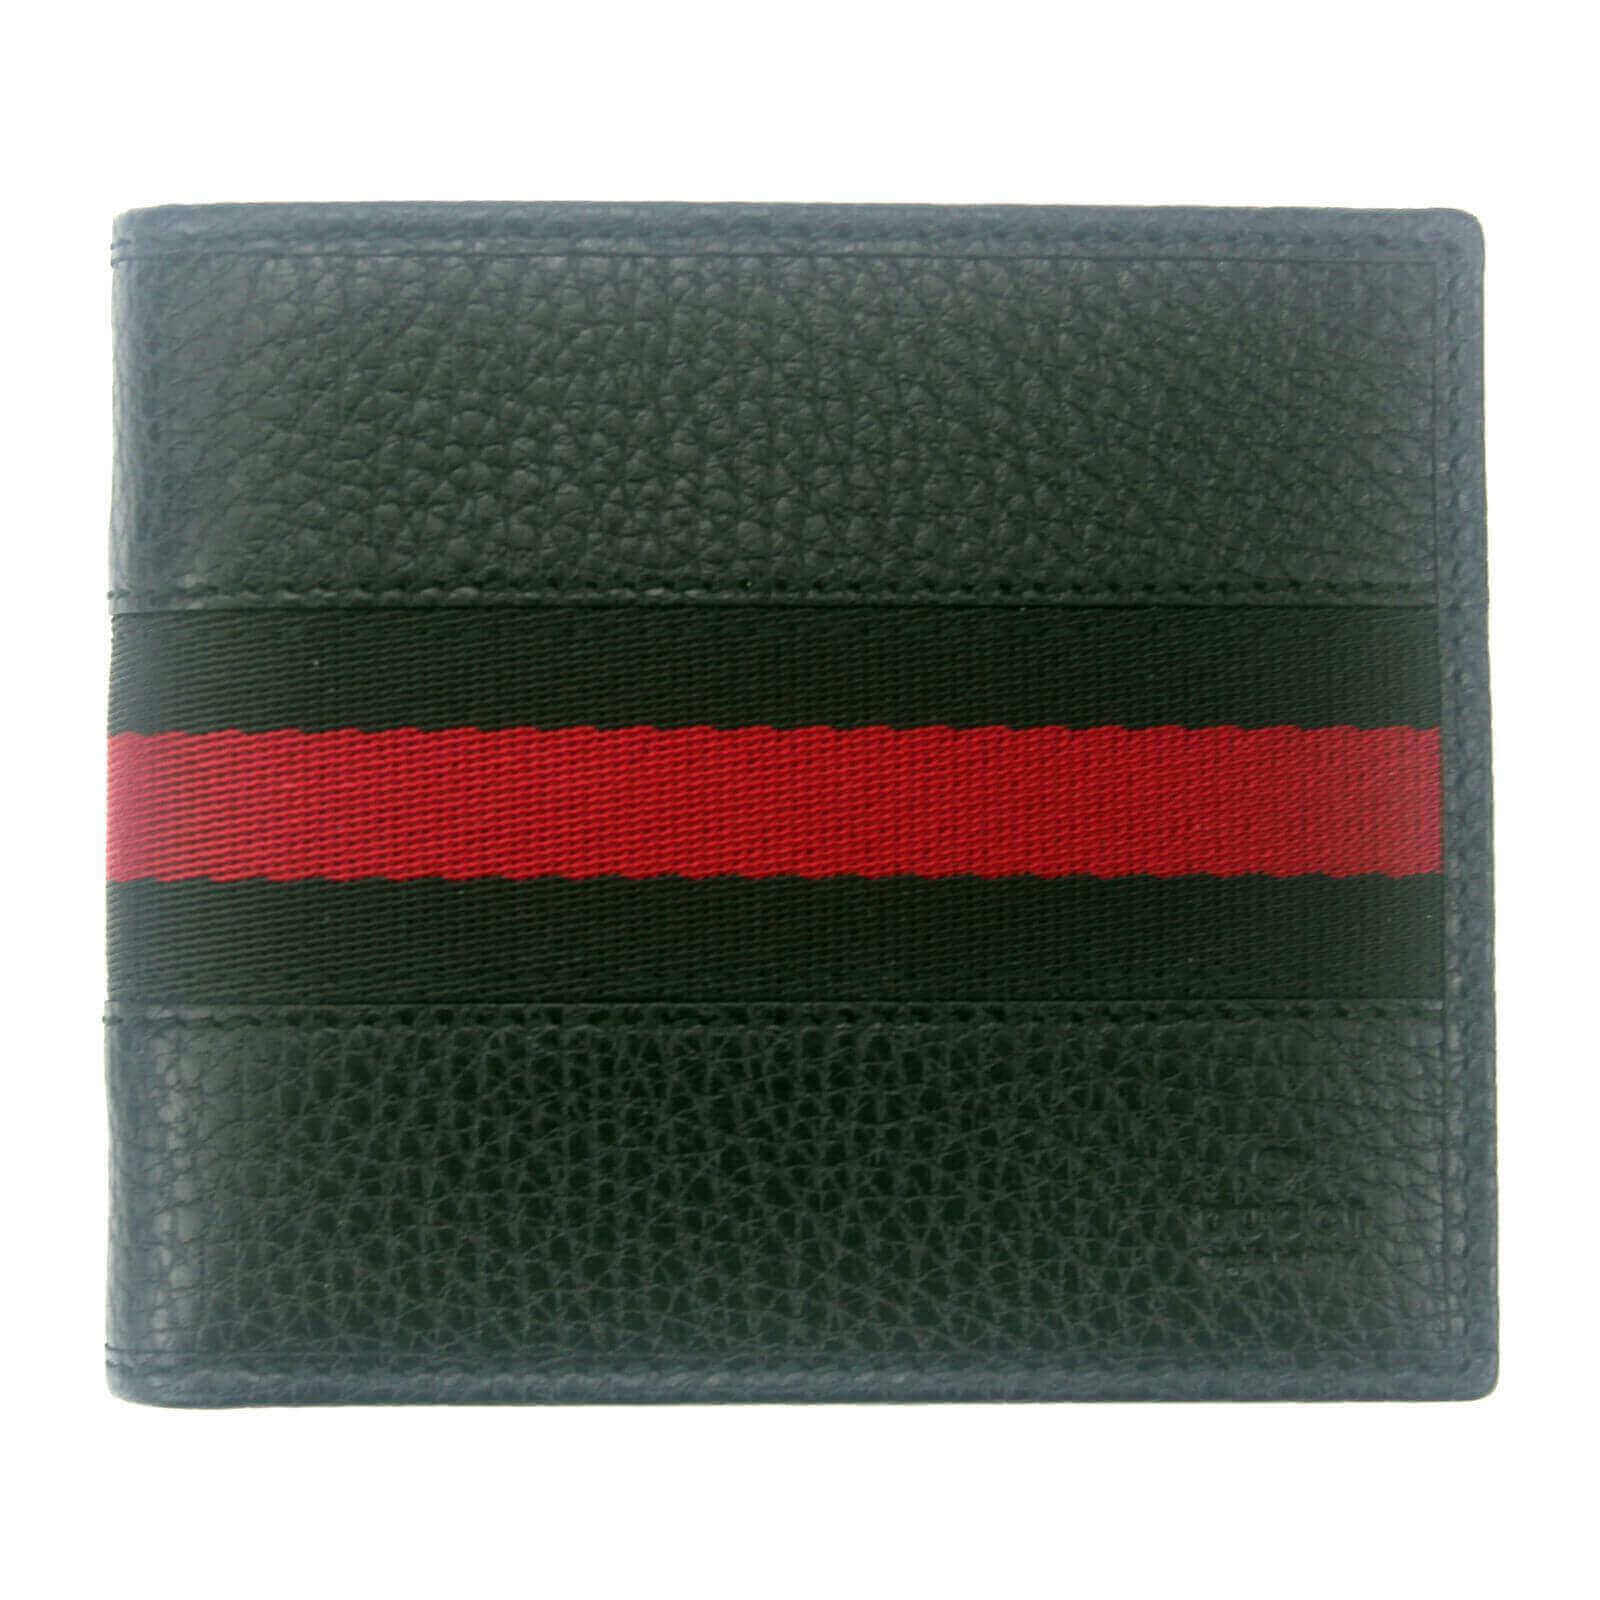 gucci wallet stripe